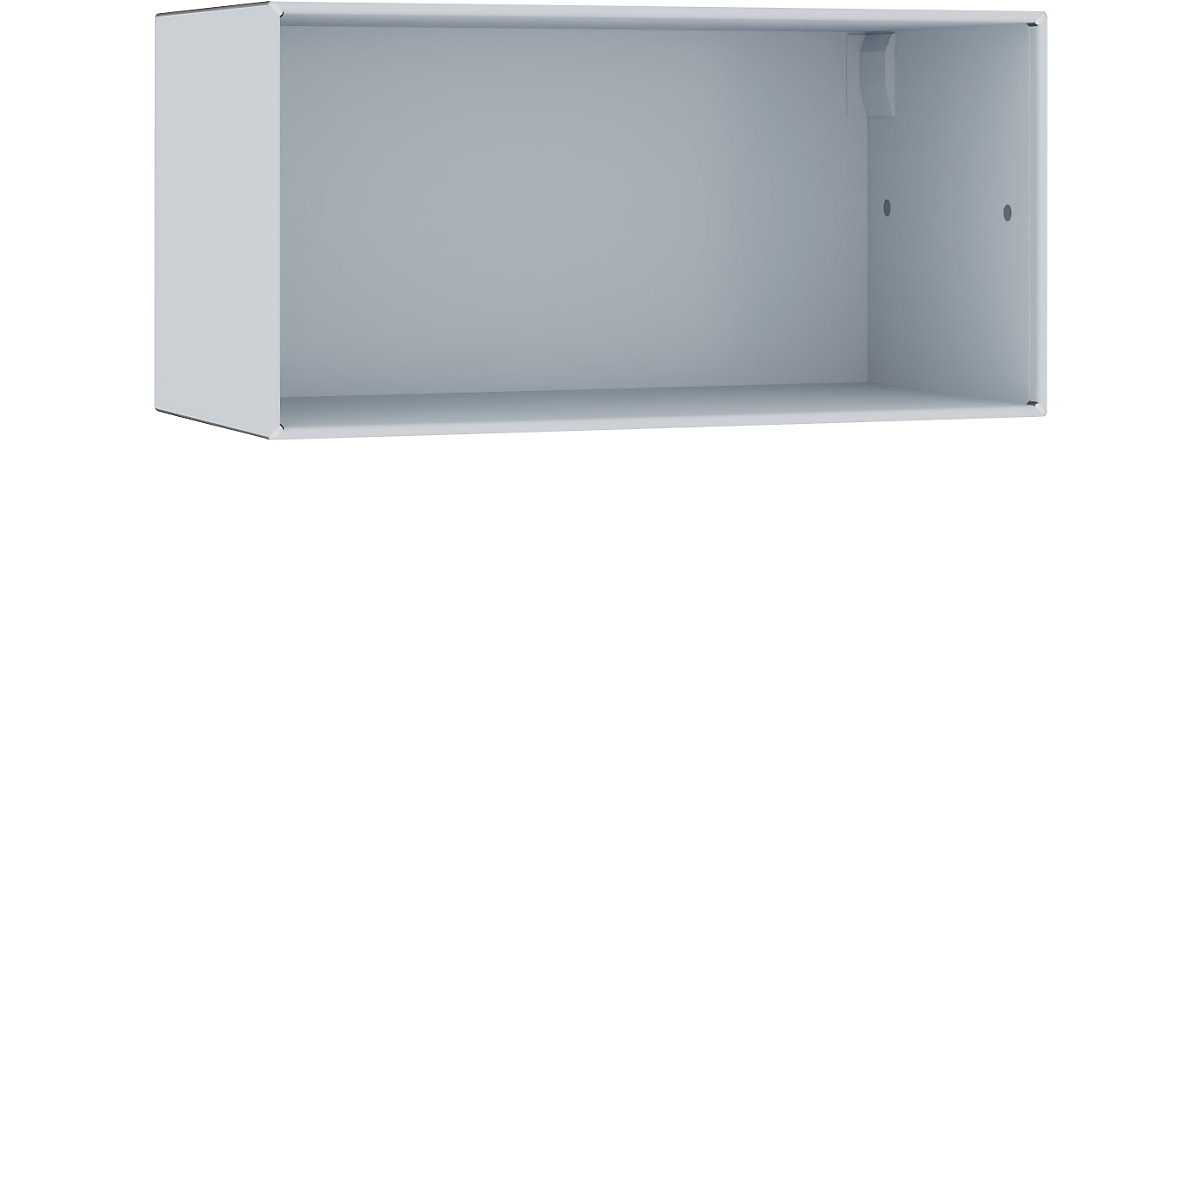 Odprta enojna viseča omarica – mauser, širina 770 mm, aluminijasto bele barve-3